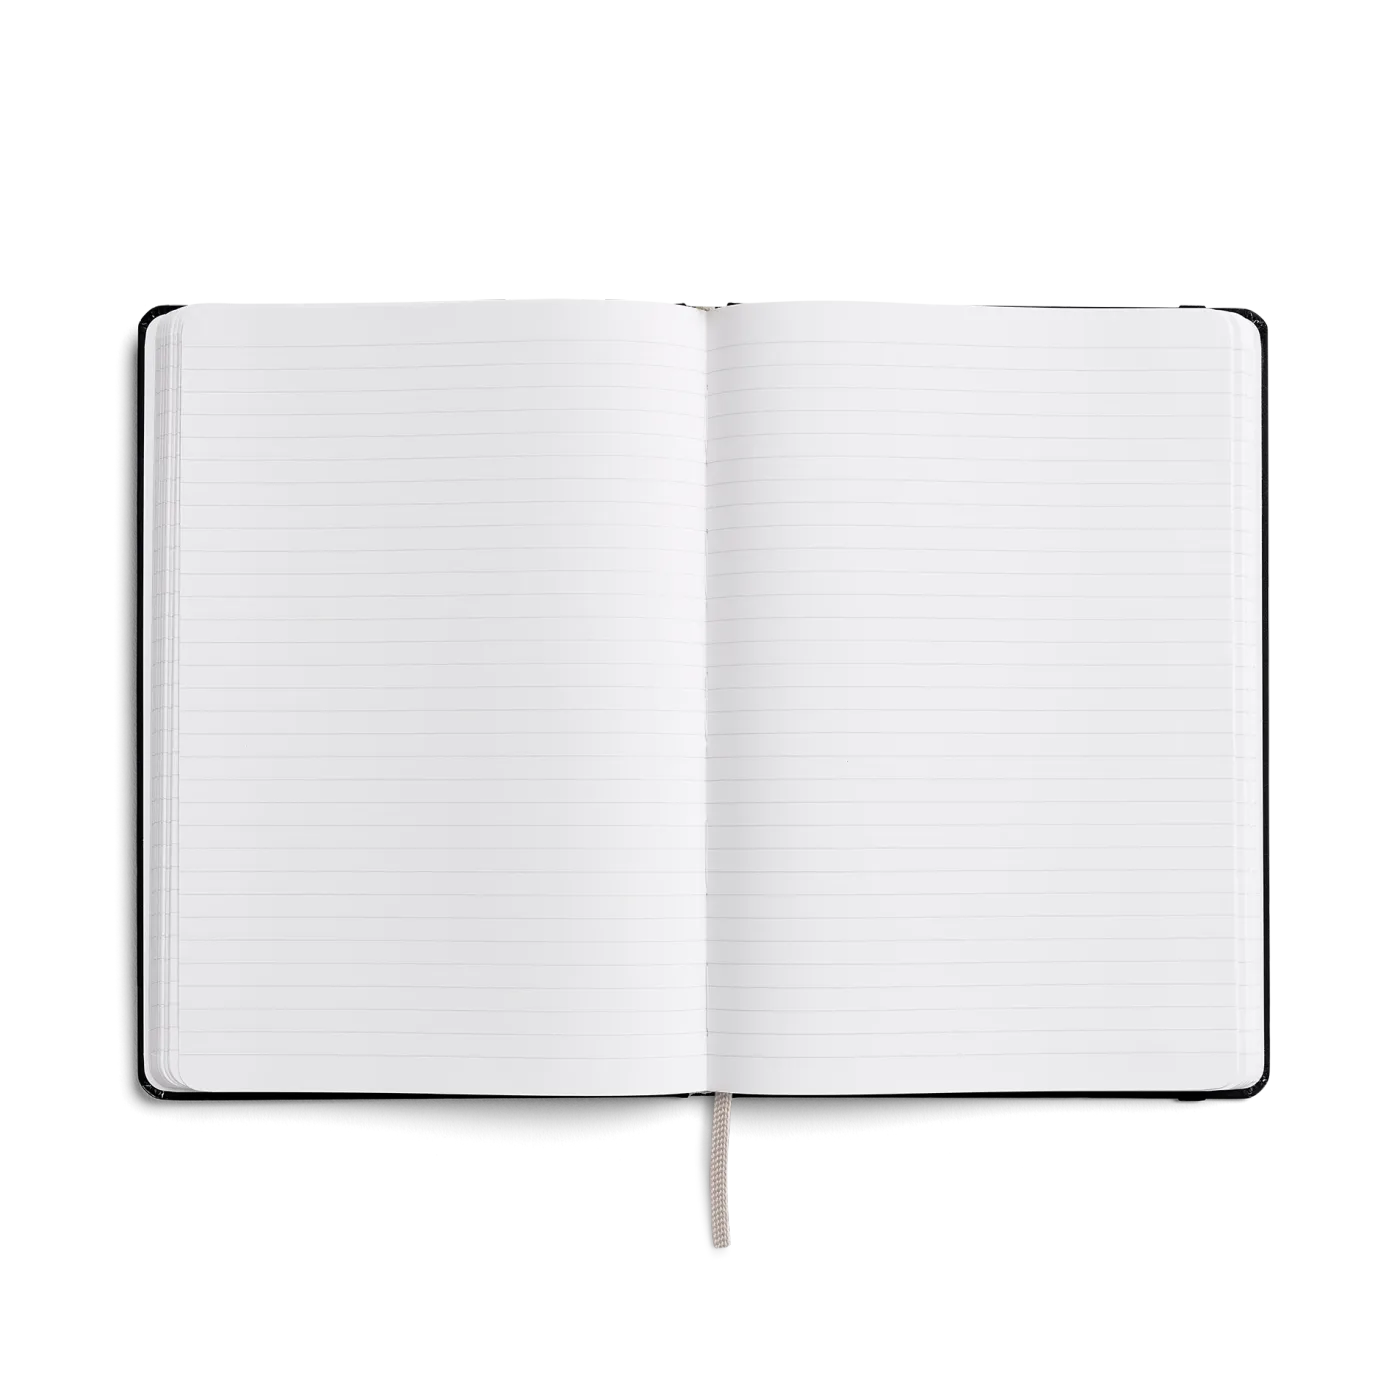 Karst Notitieboek A5 Hardcover - Zwart (Lined)